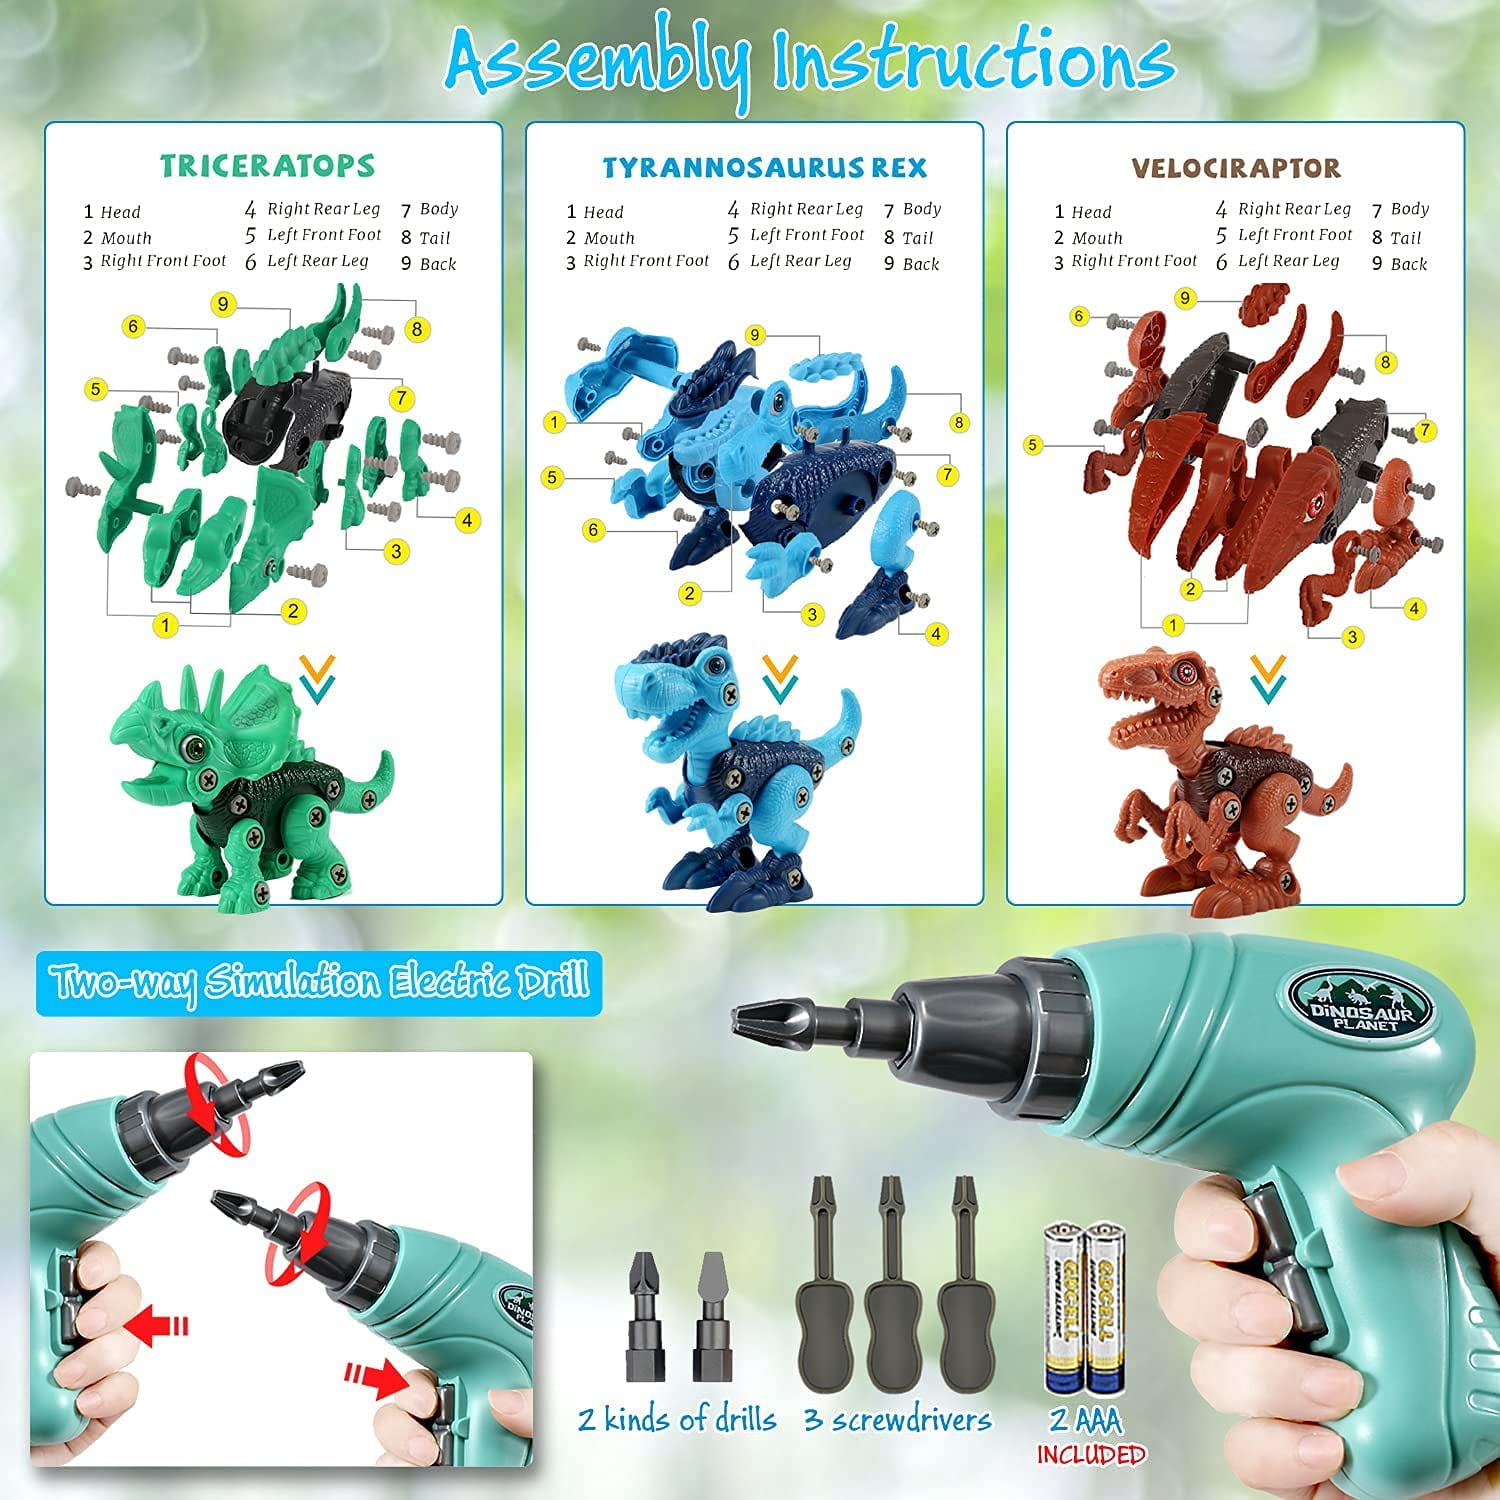  EduCuties Dinosaur Toys for Kids 3-5, Take Apart Dino